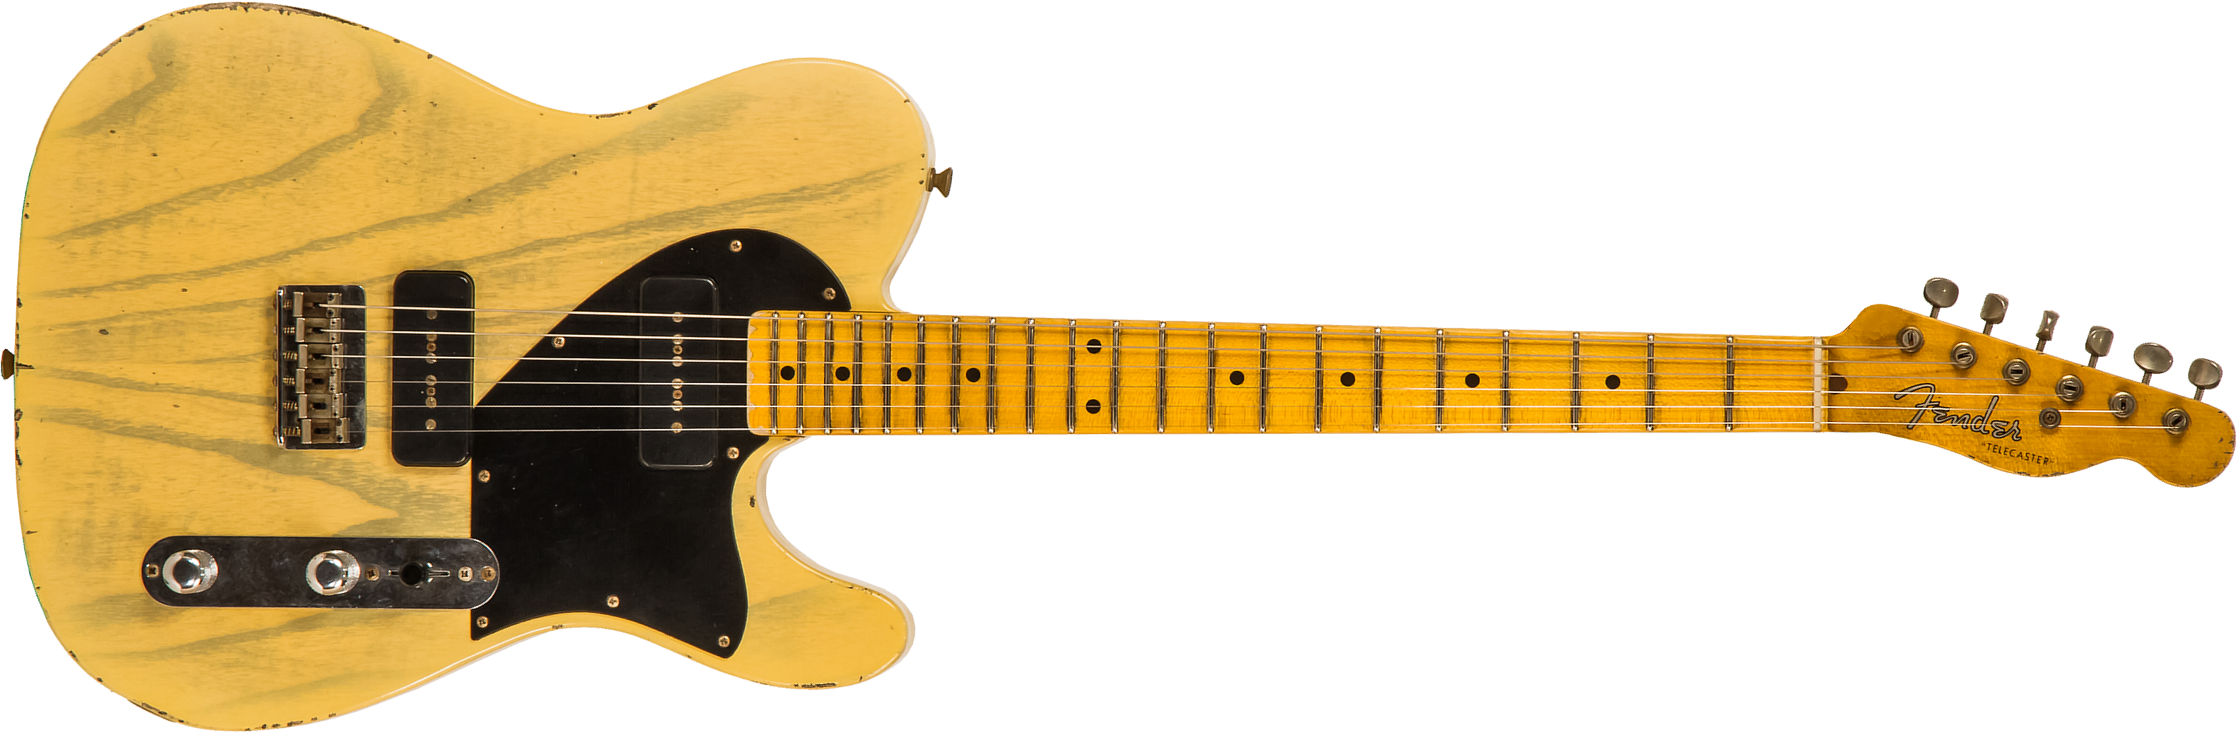 Fender Custom Shop Tele 1950 Masterbuilt J.smith Mn #r116221 - Relic Nocaster Blonde - Tel shape electric guitar - Main picture